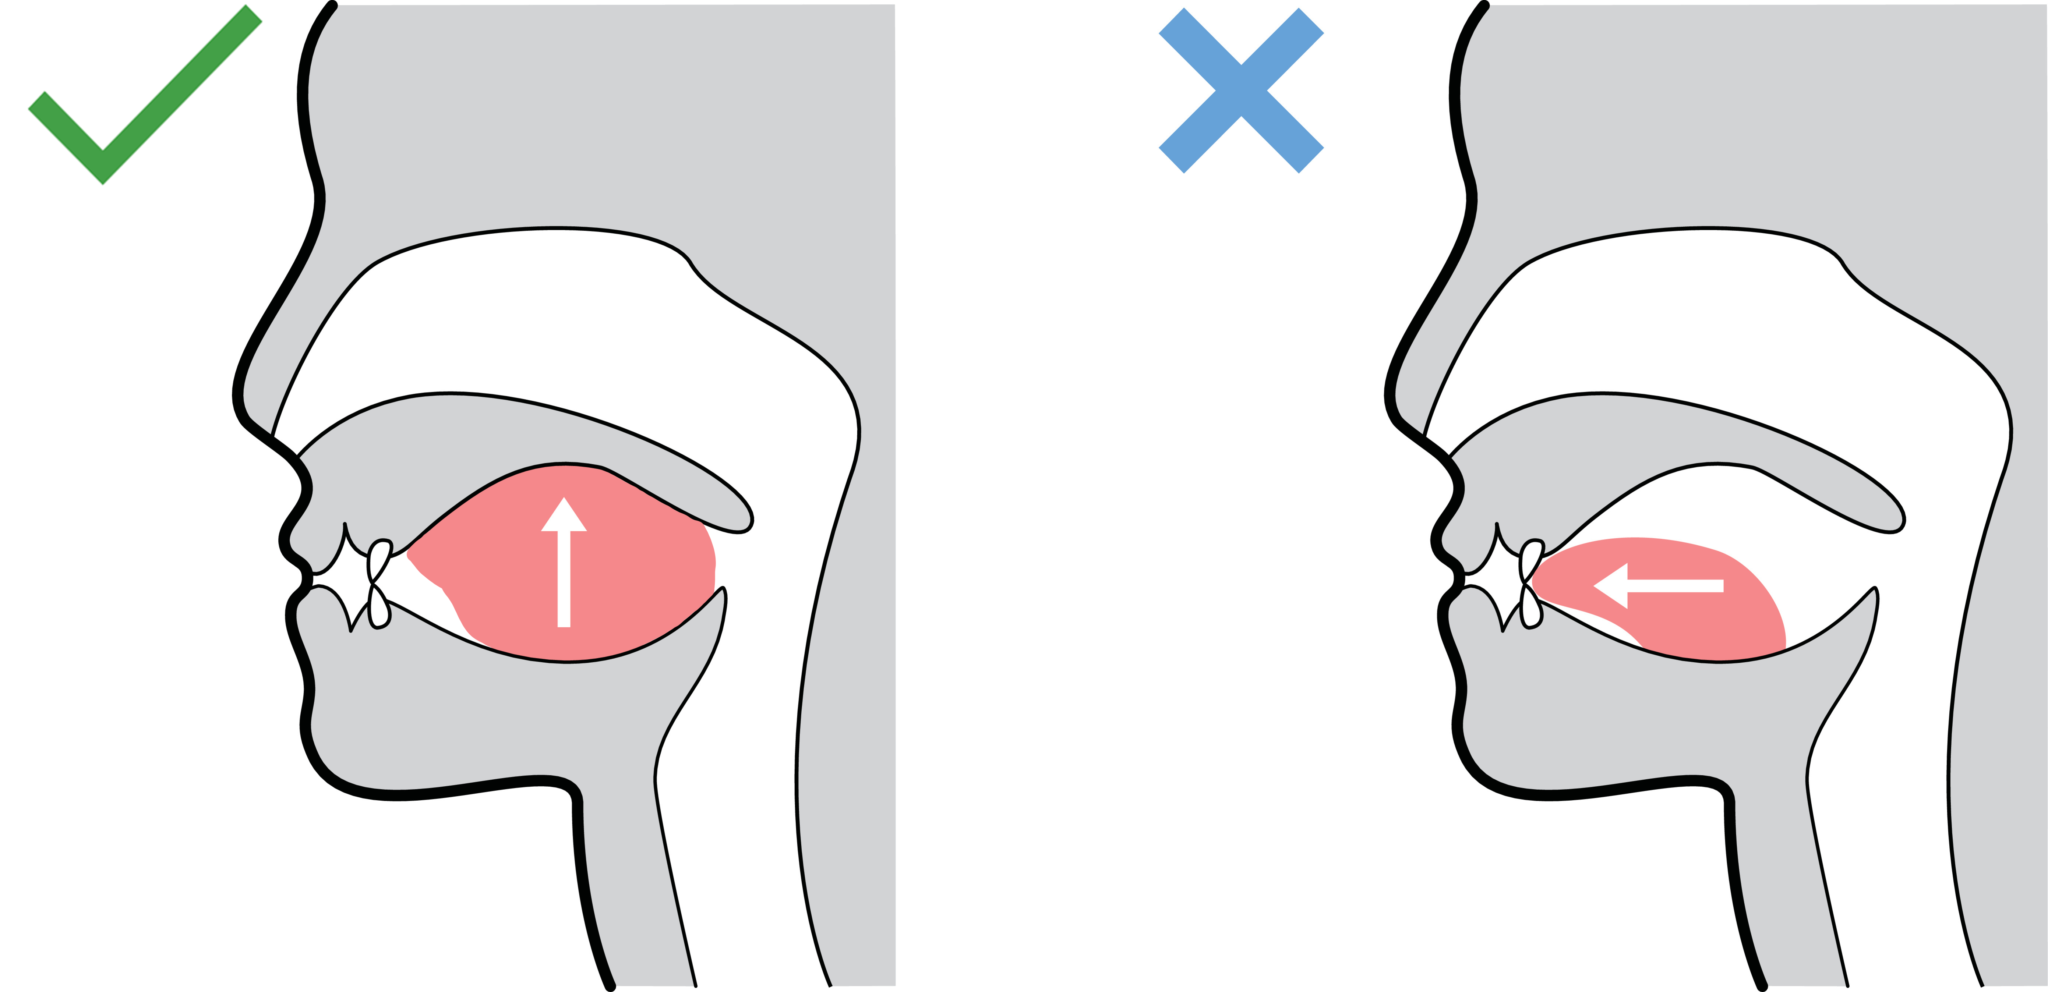 tongue-posture-diagram-edited-2048x992.png